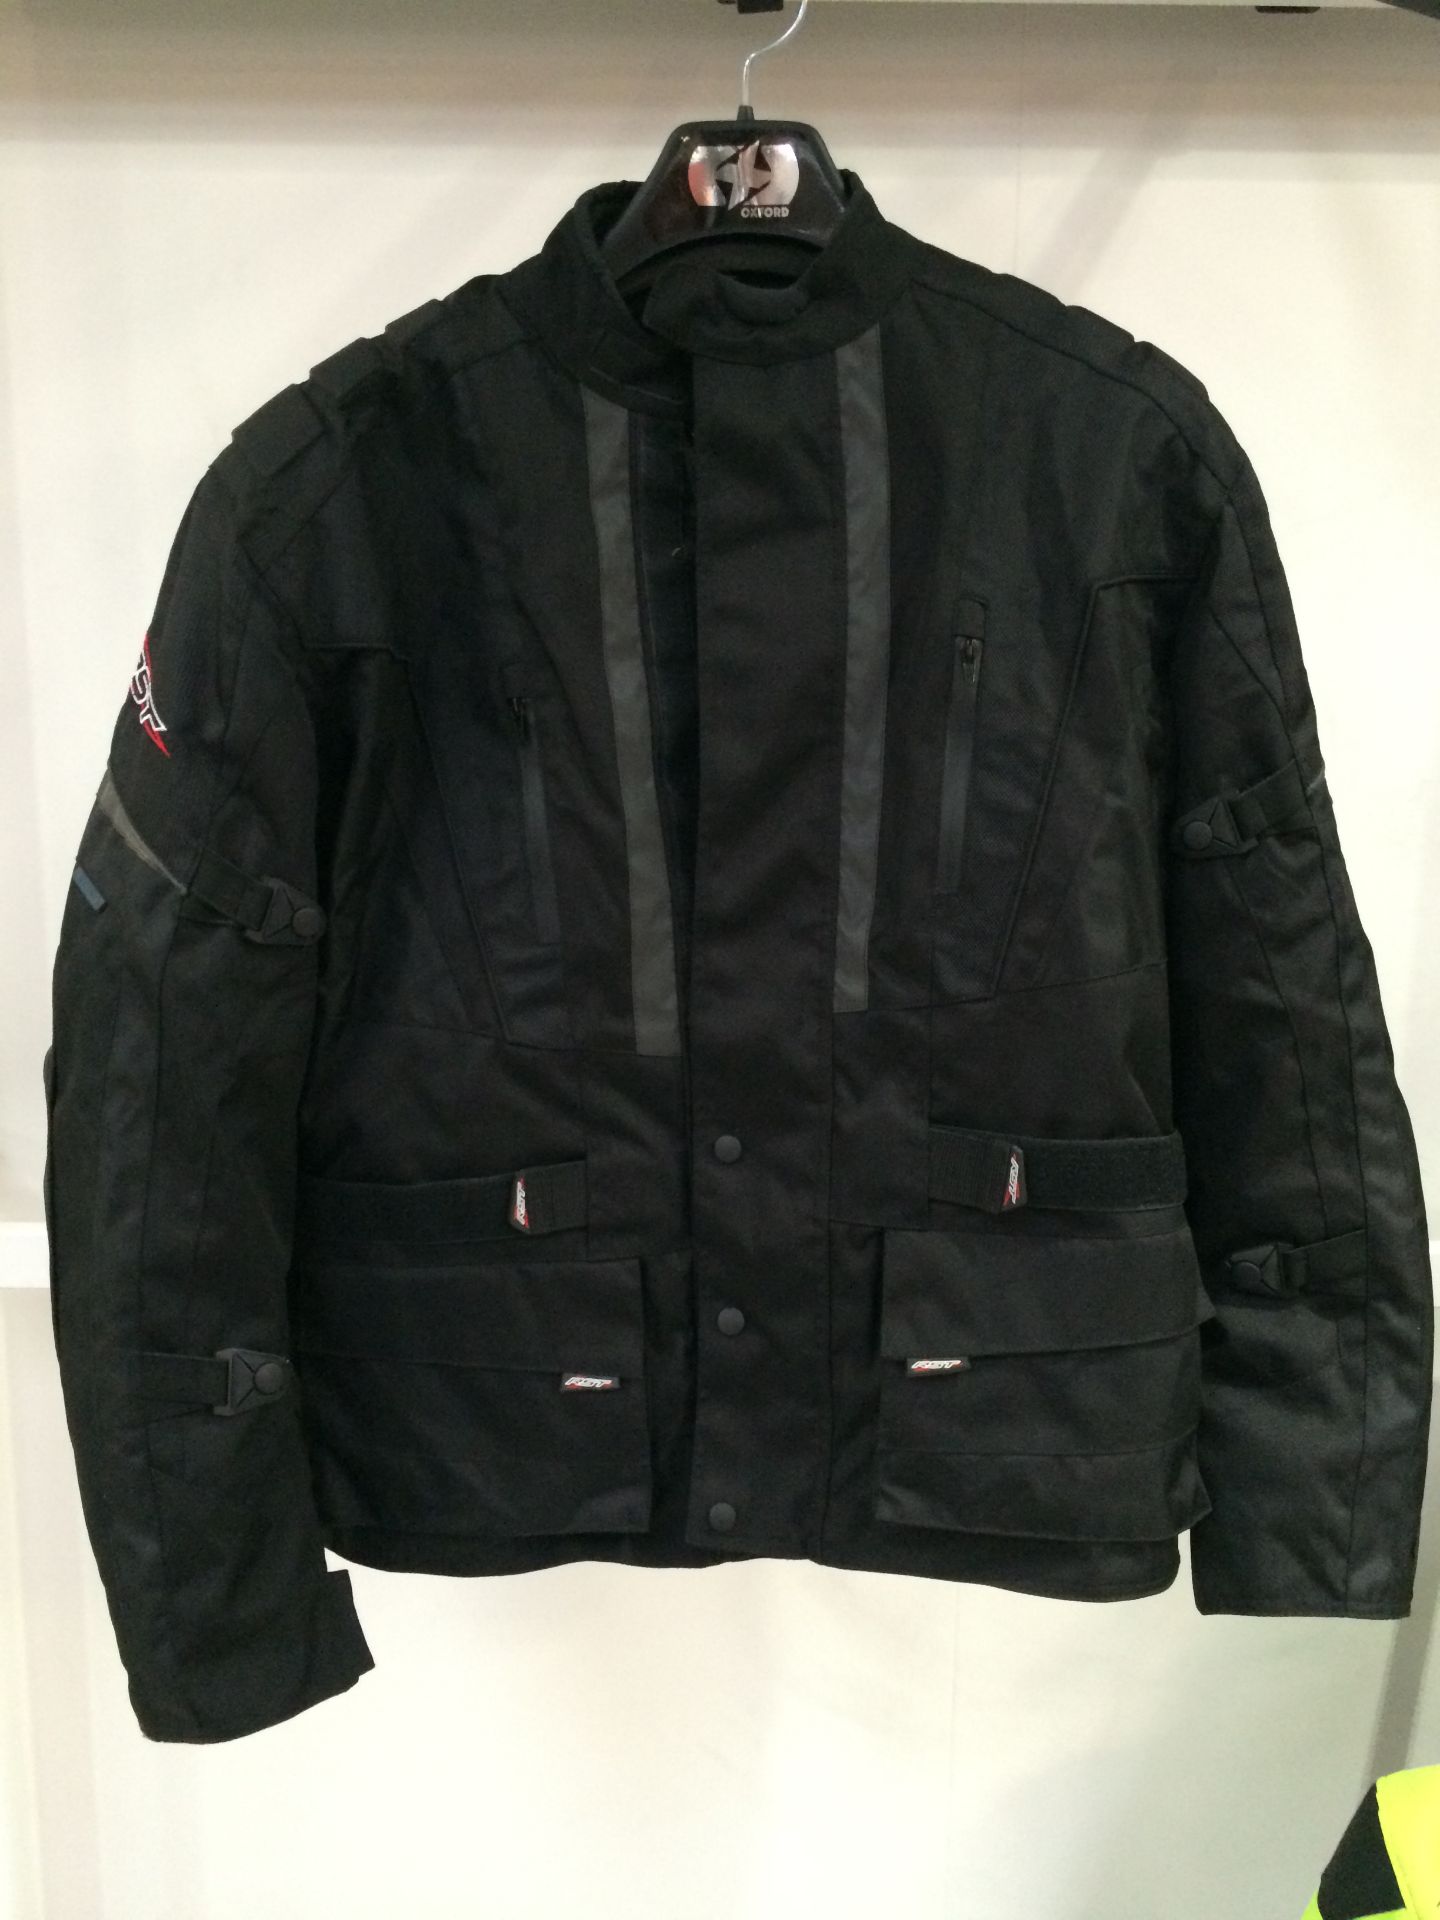 RST Tourmaster 1326 Black Jacket. Size 3XL